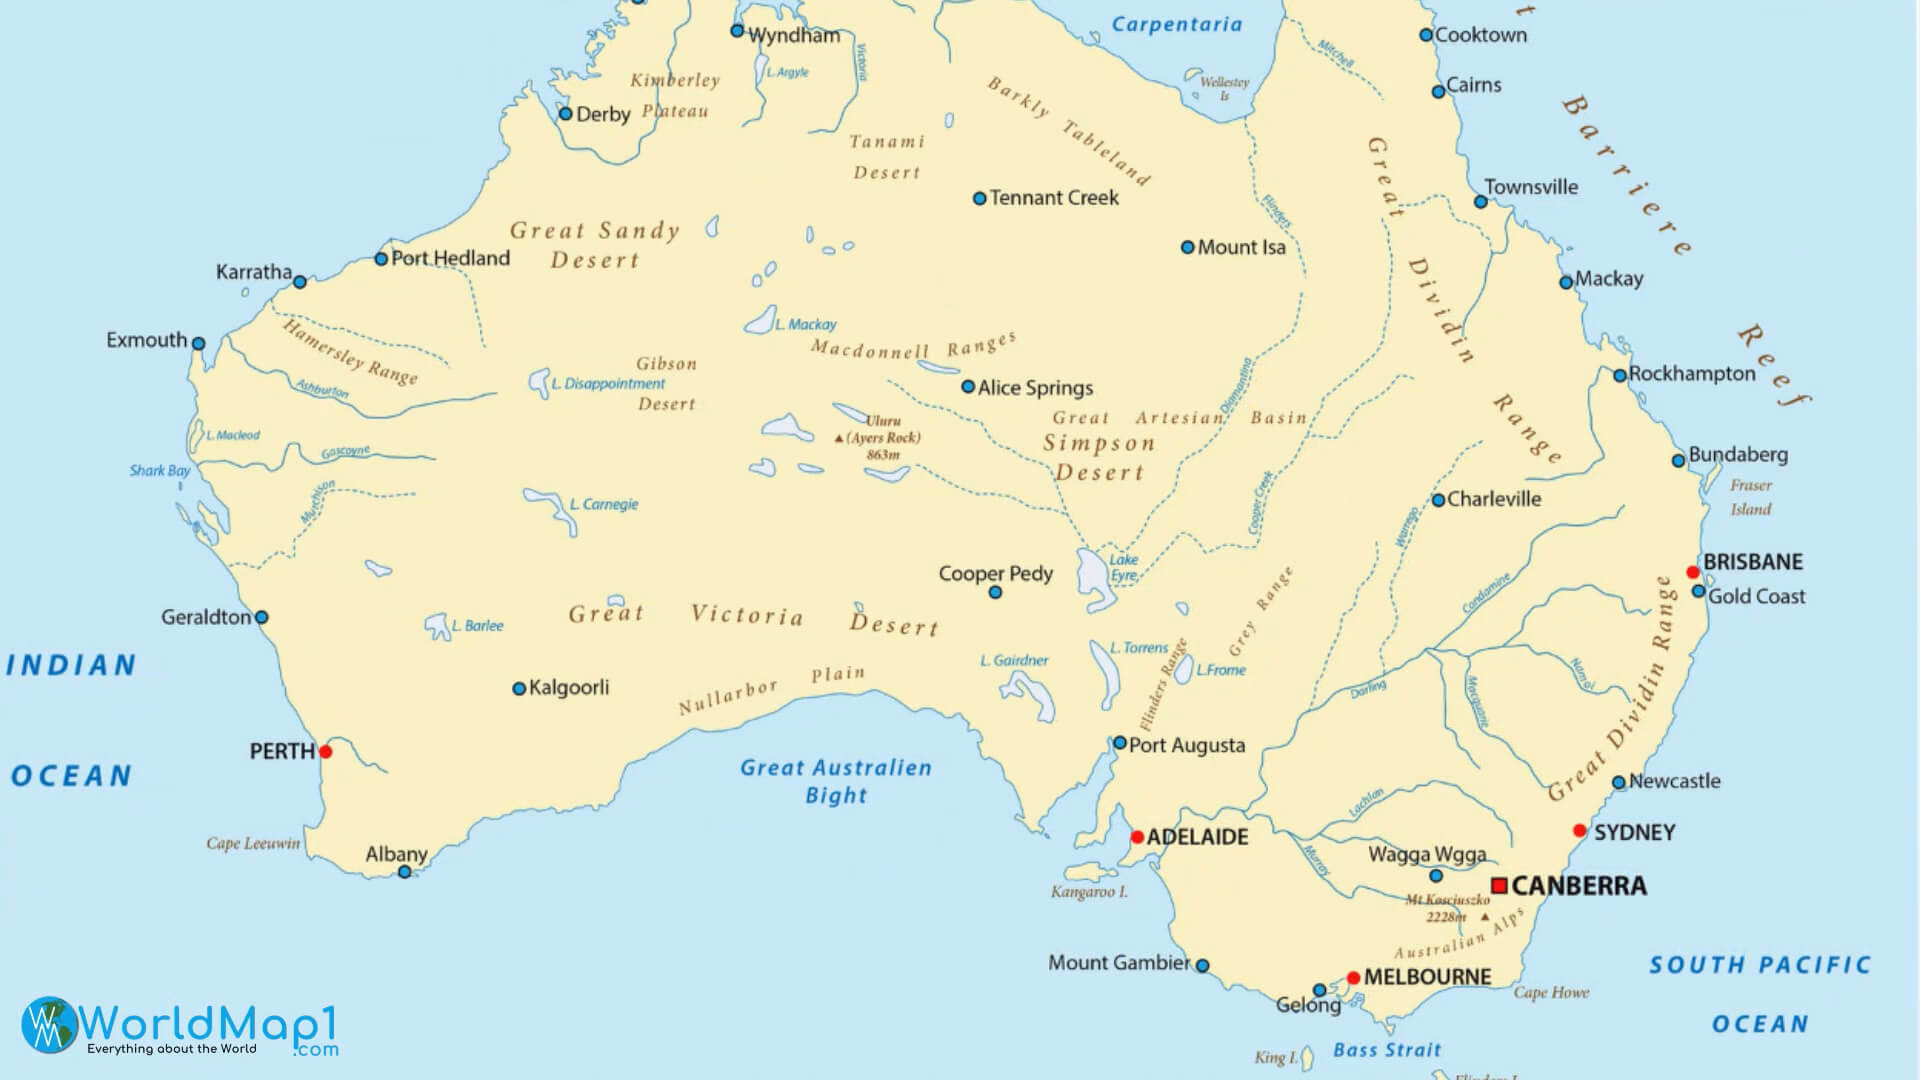 Australia Rivers Map